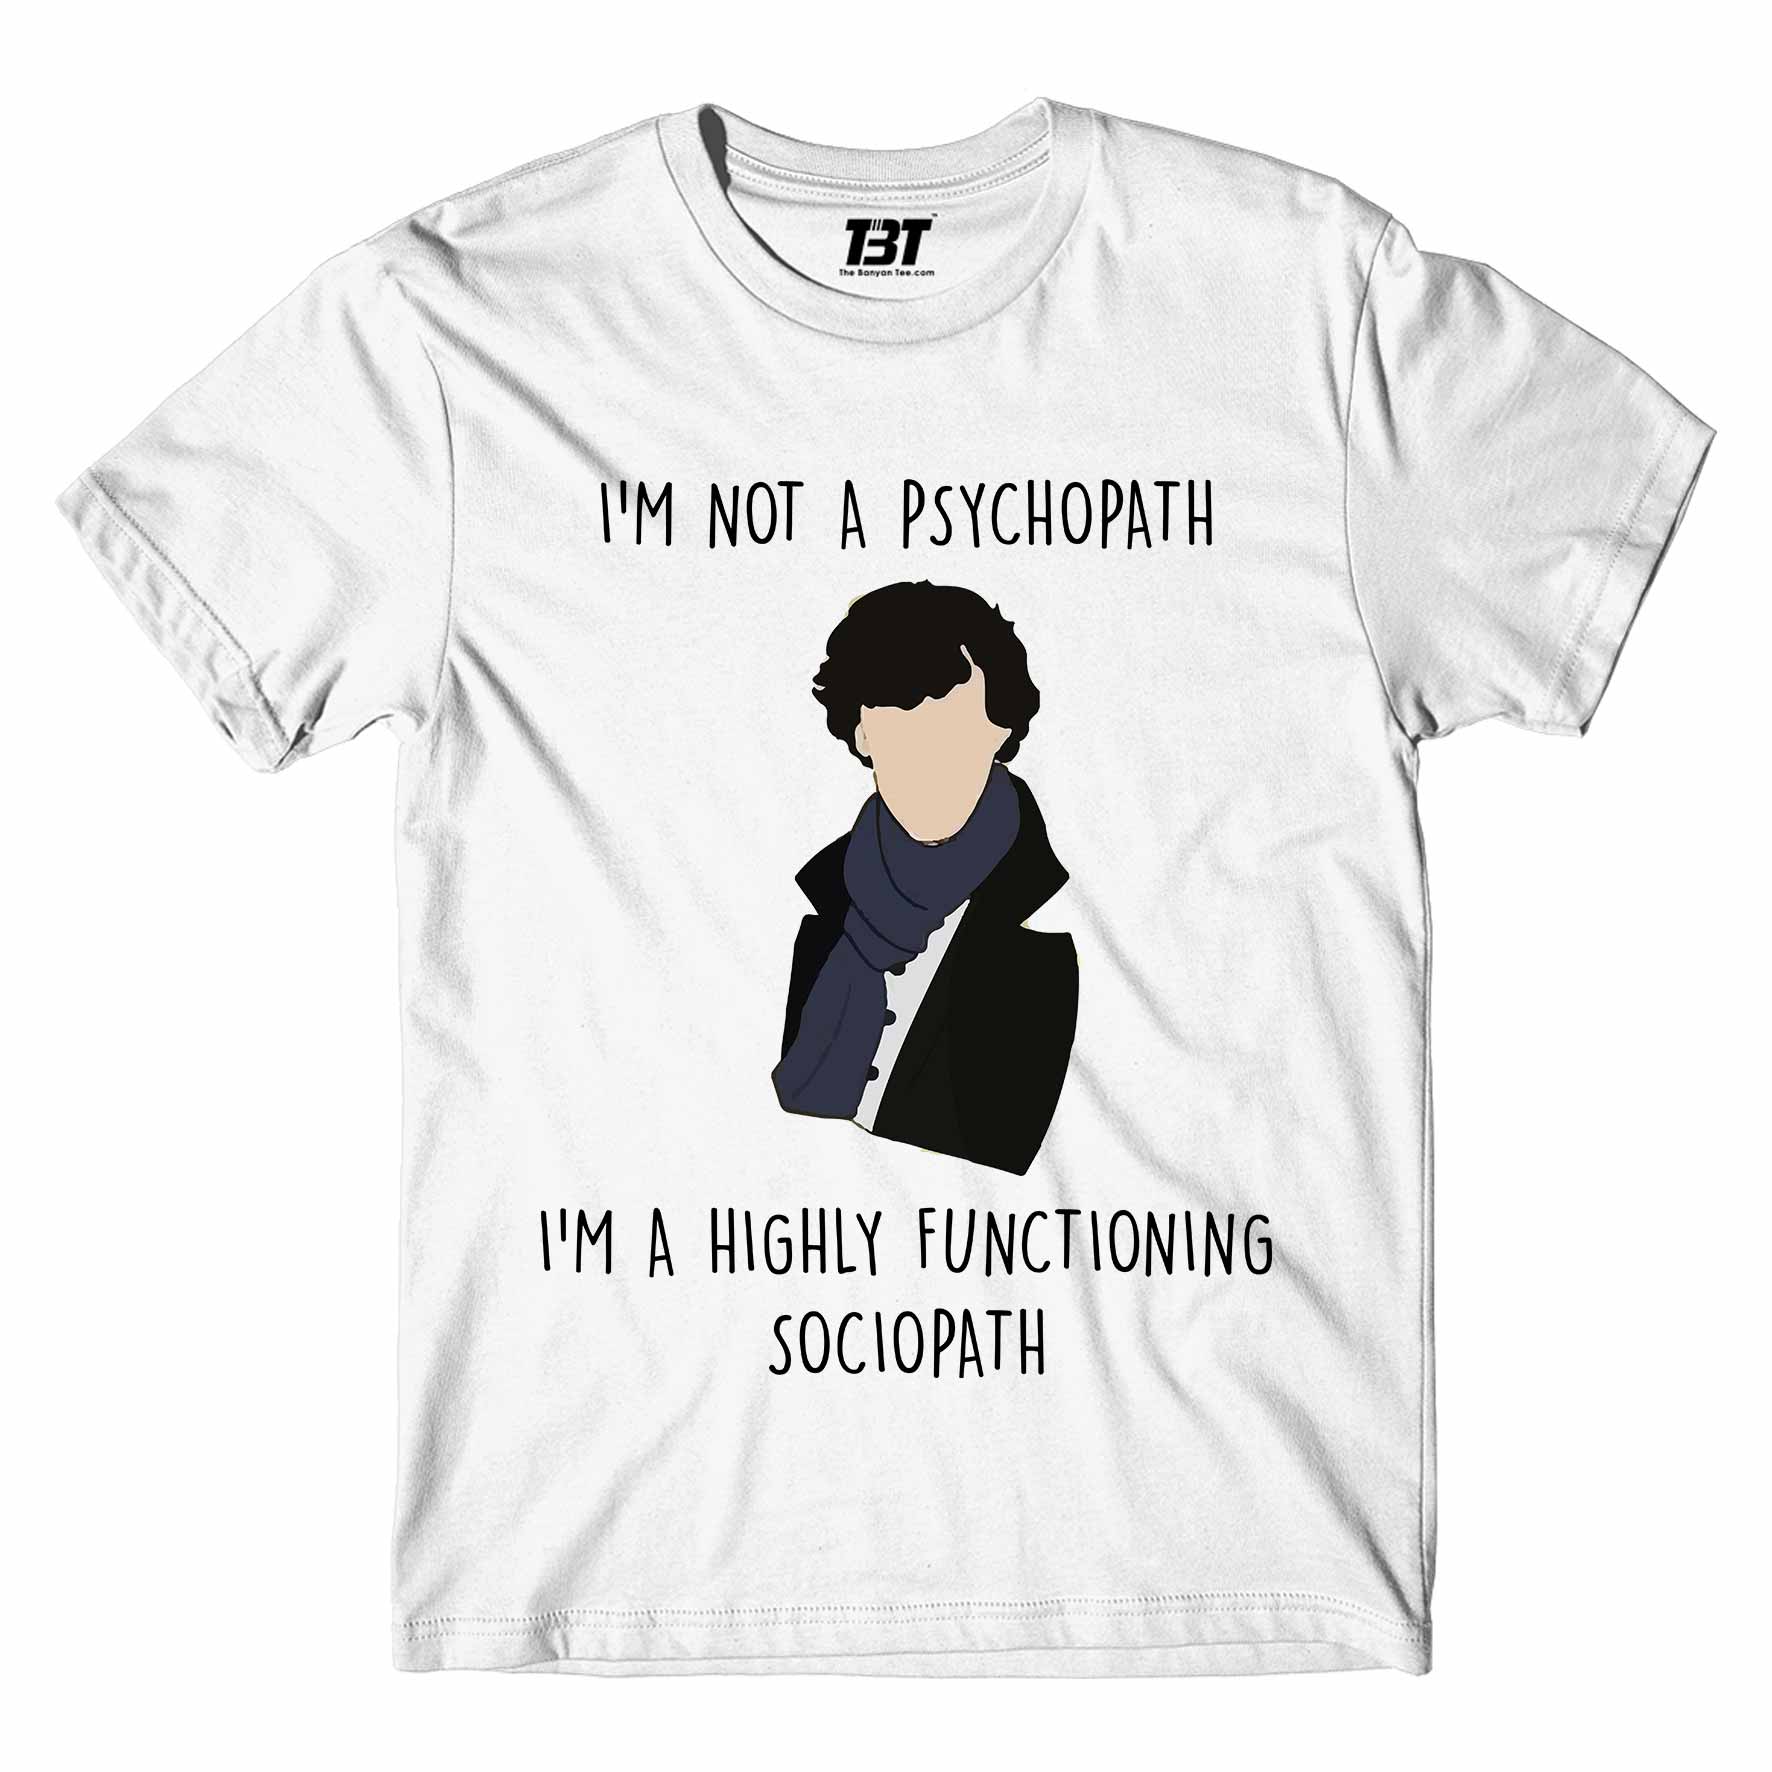 Sherlock T-shirt by The Banyan Tee TBTSherlock T-shirt by The Banyan Tee TBT